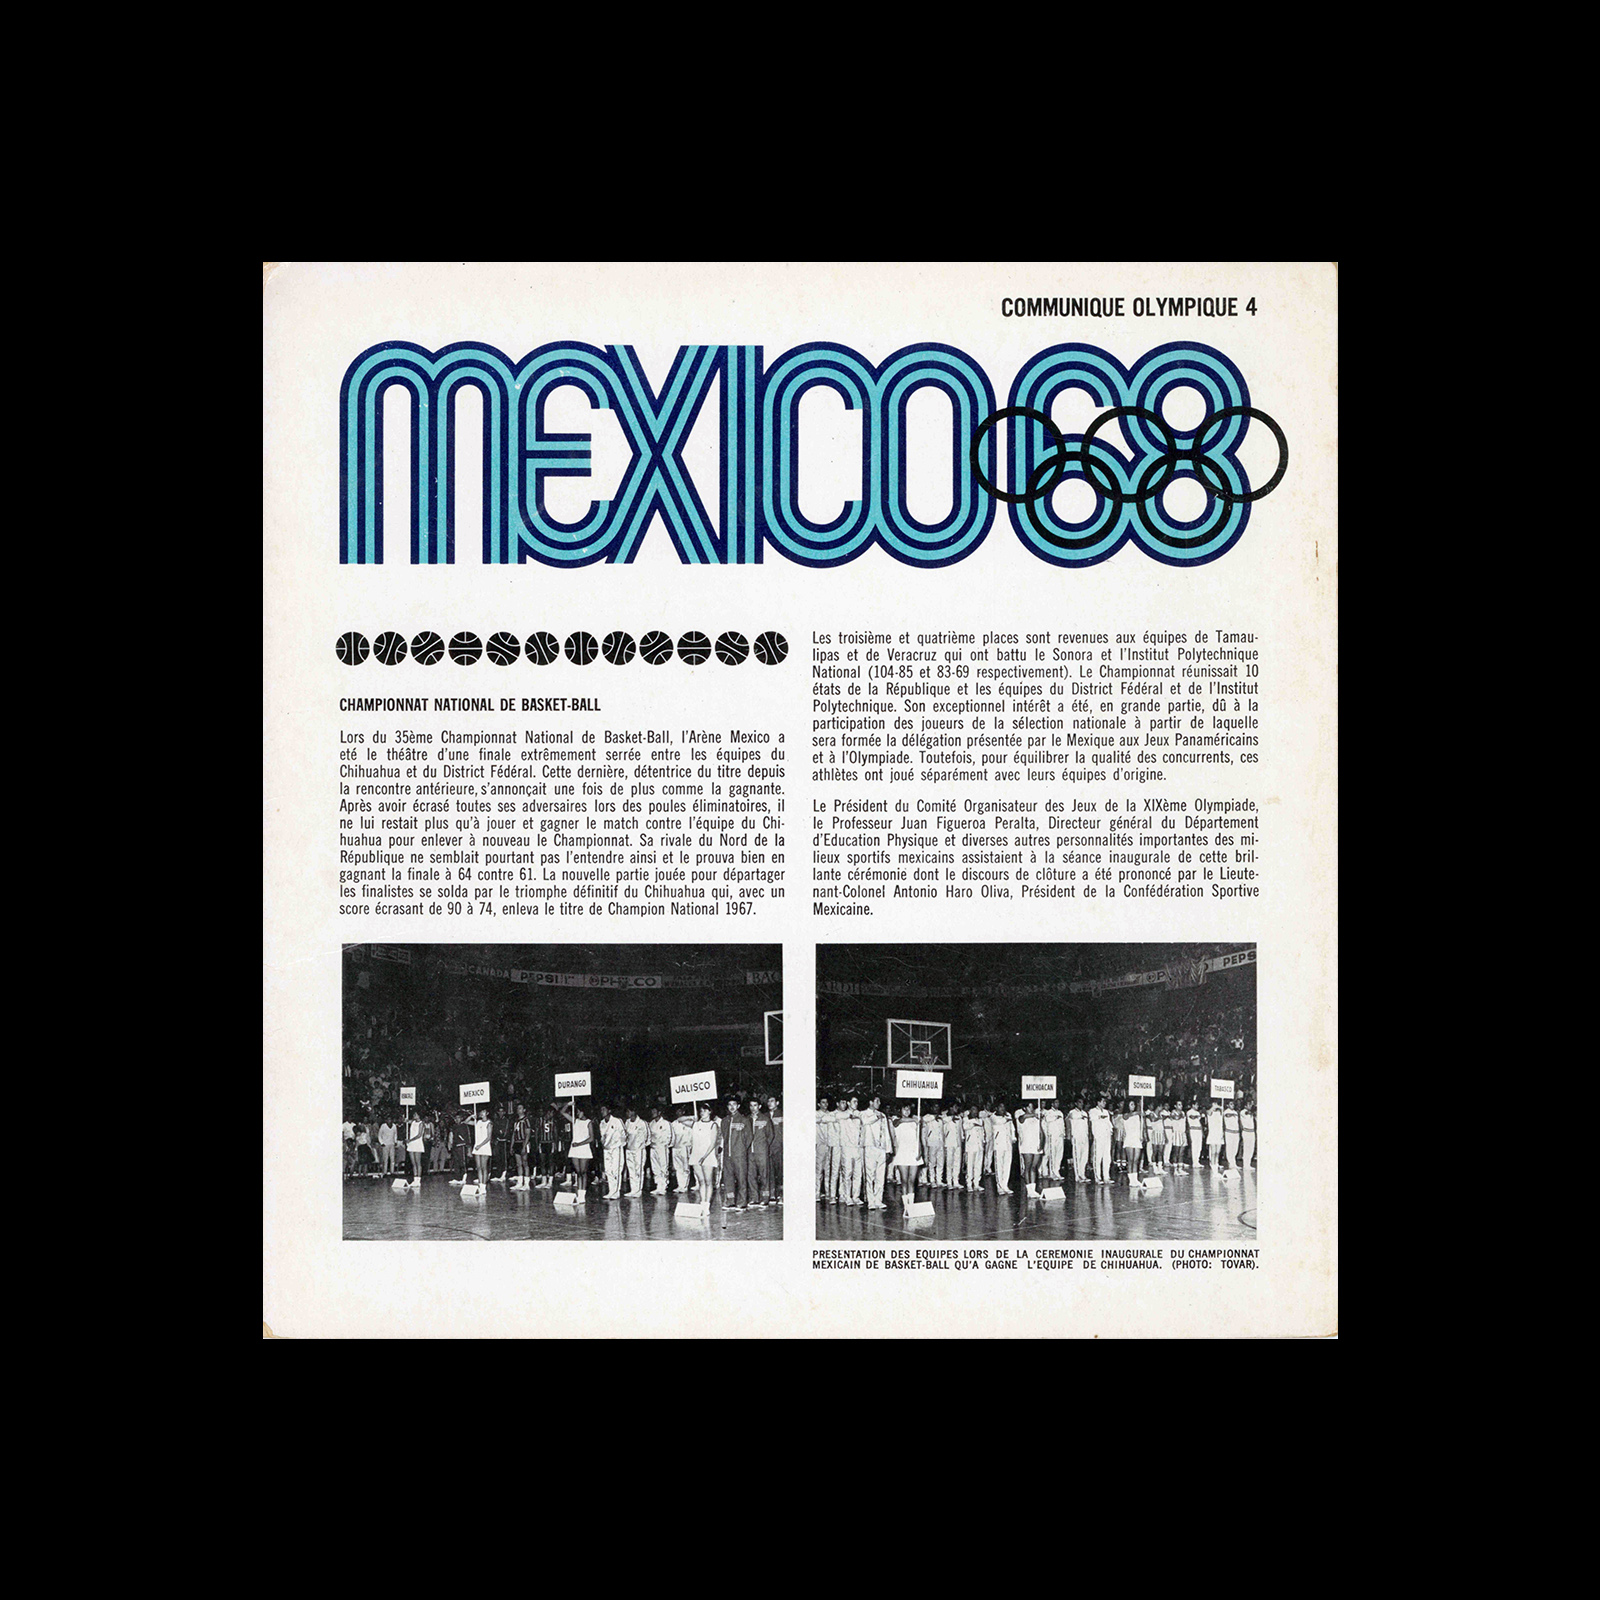 Mexico 1968, Communique Olympique 4, 1968. Designed by Lance Wyman